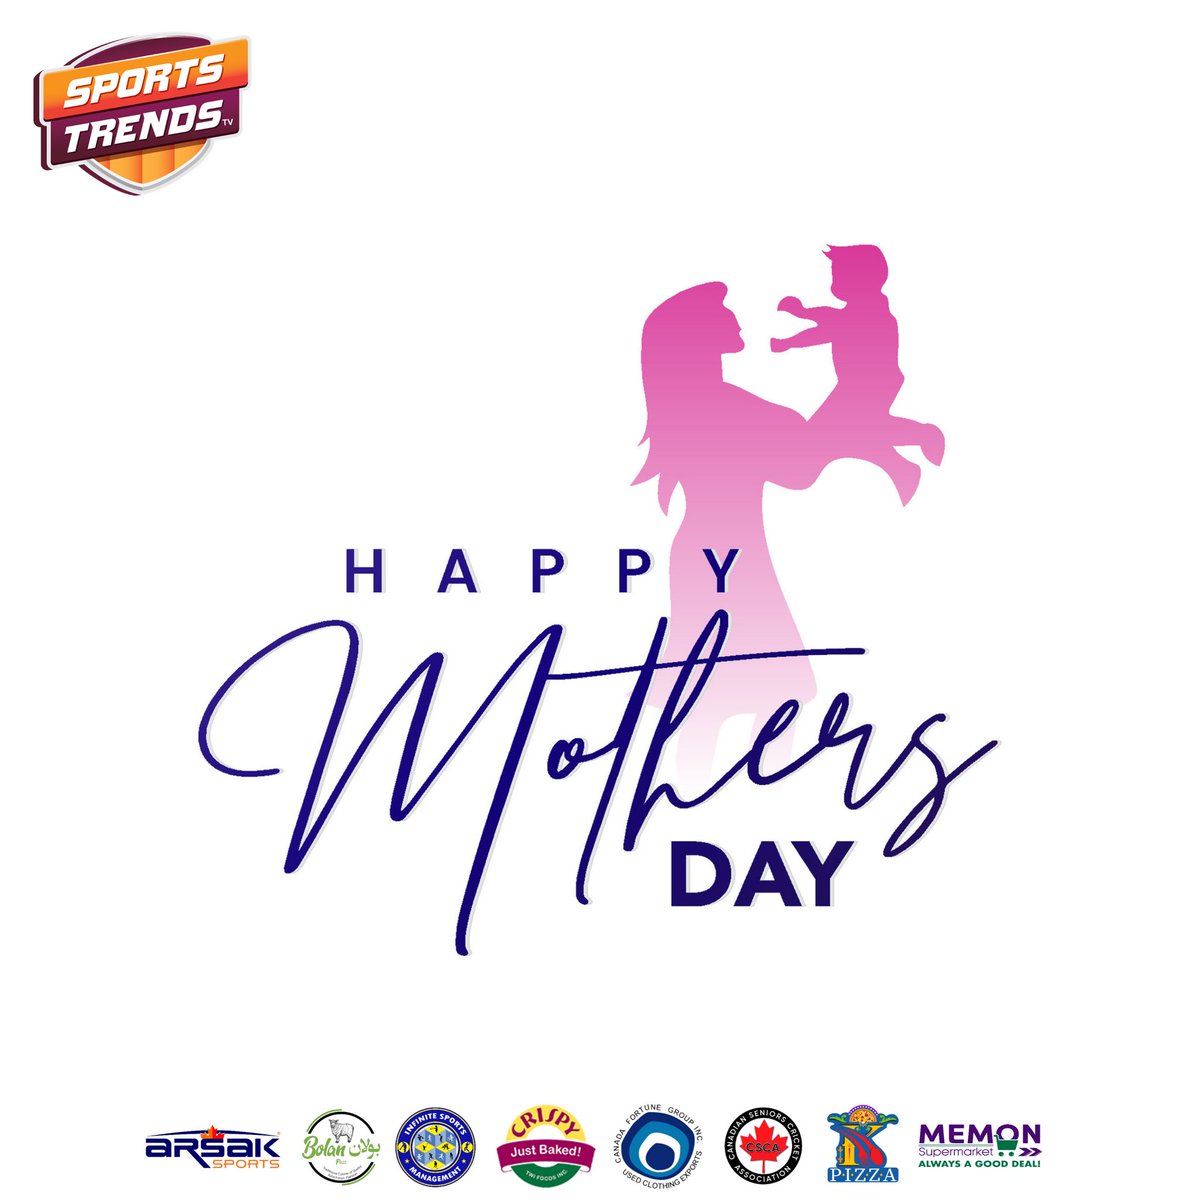 Happy Mothers Day ❤️ #MothersDay #HappyMothersDay #SportsTrendsCan #SportsTrendsCanada